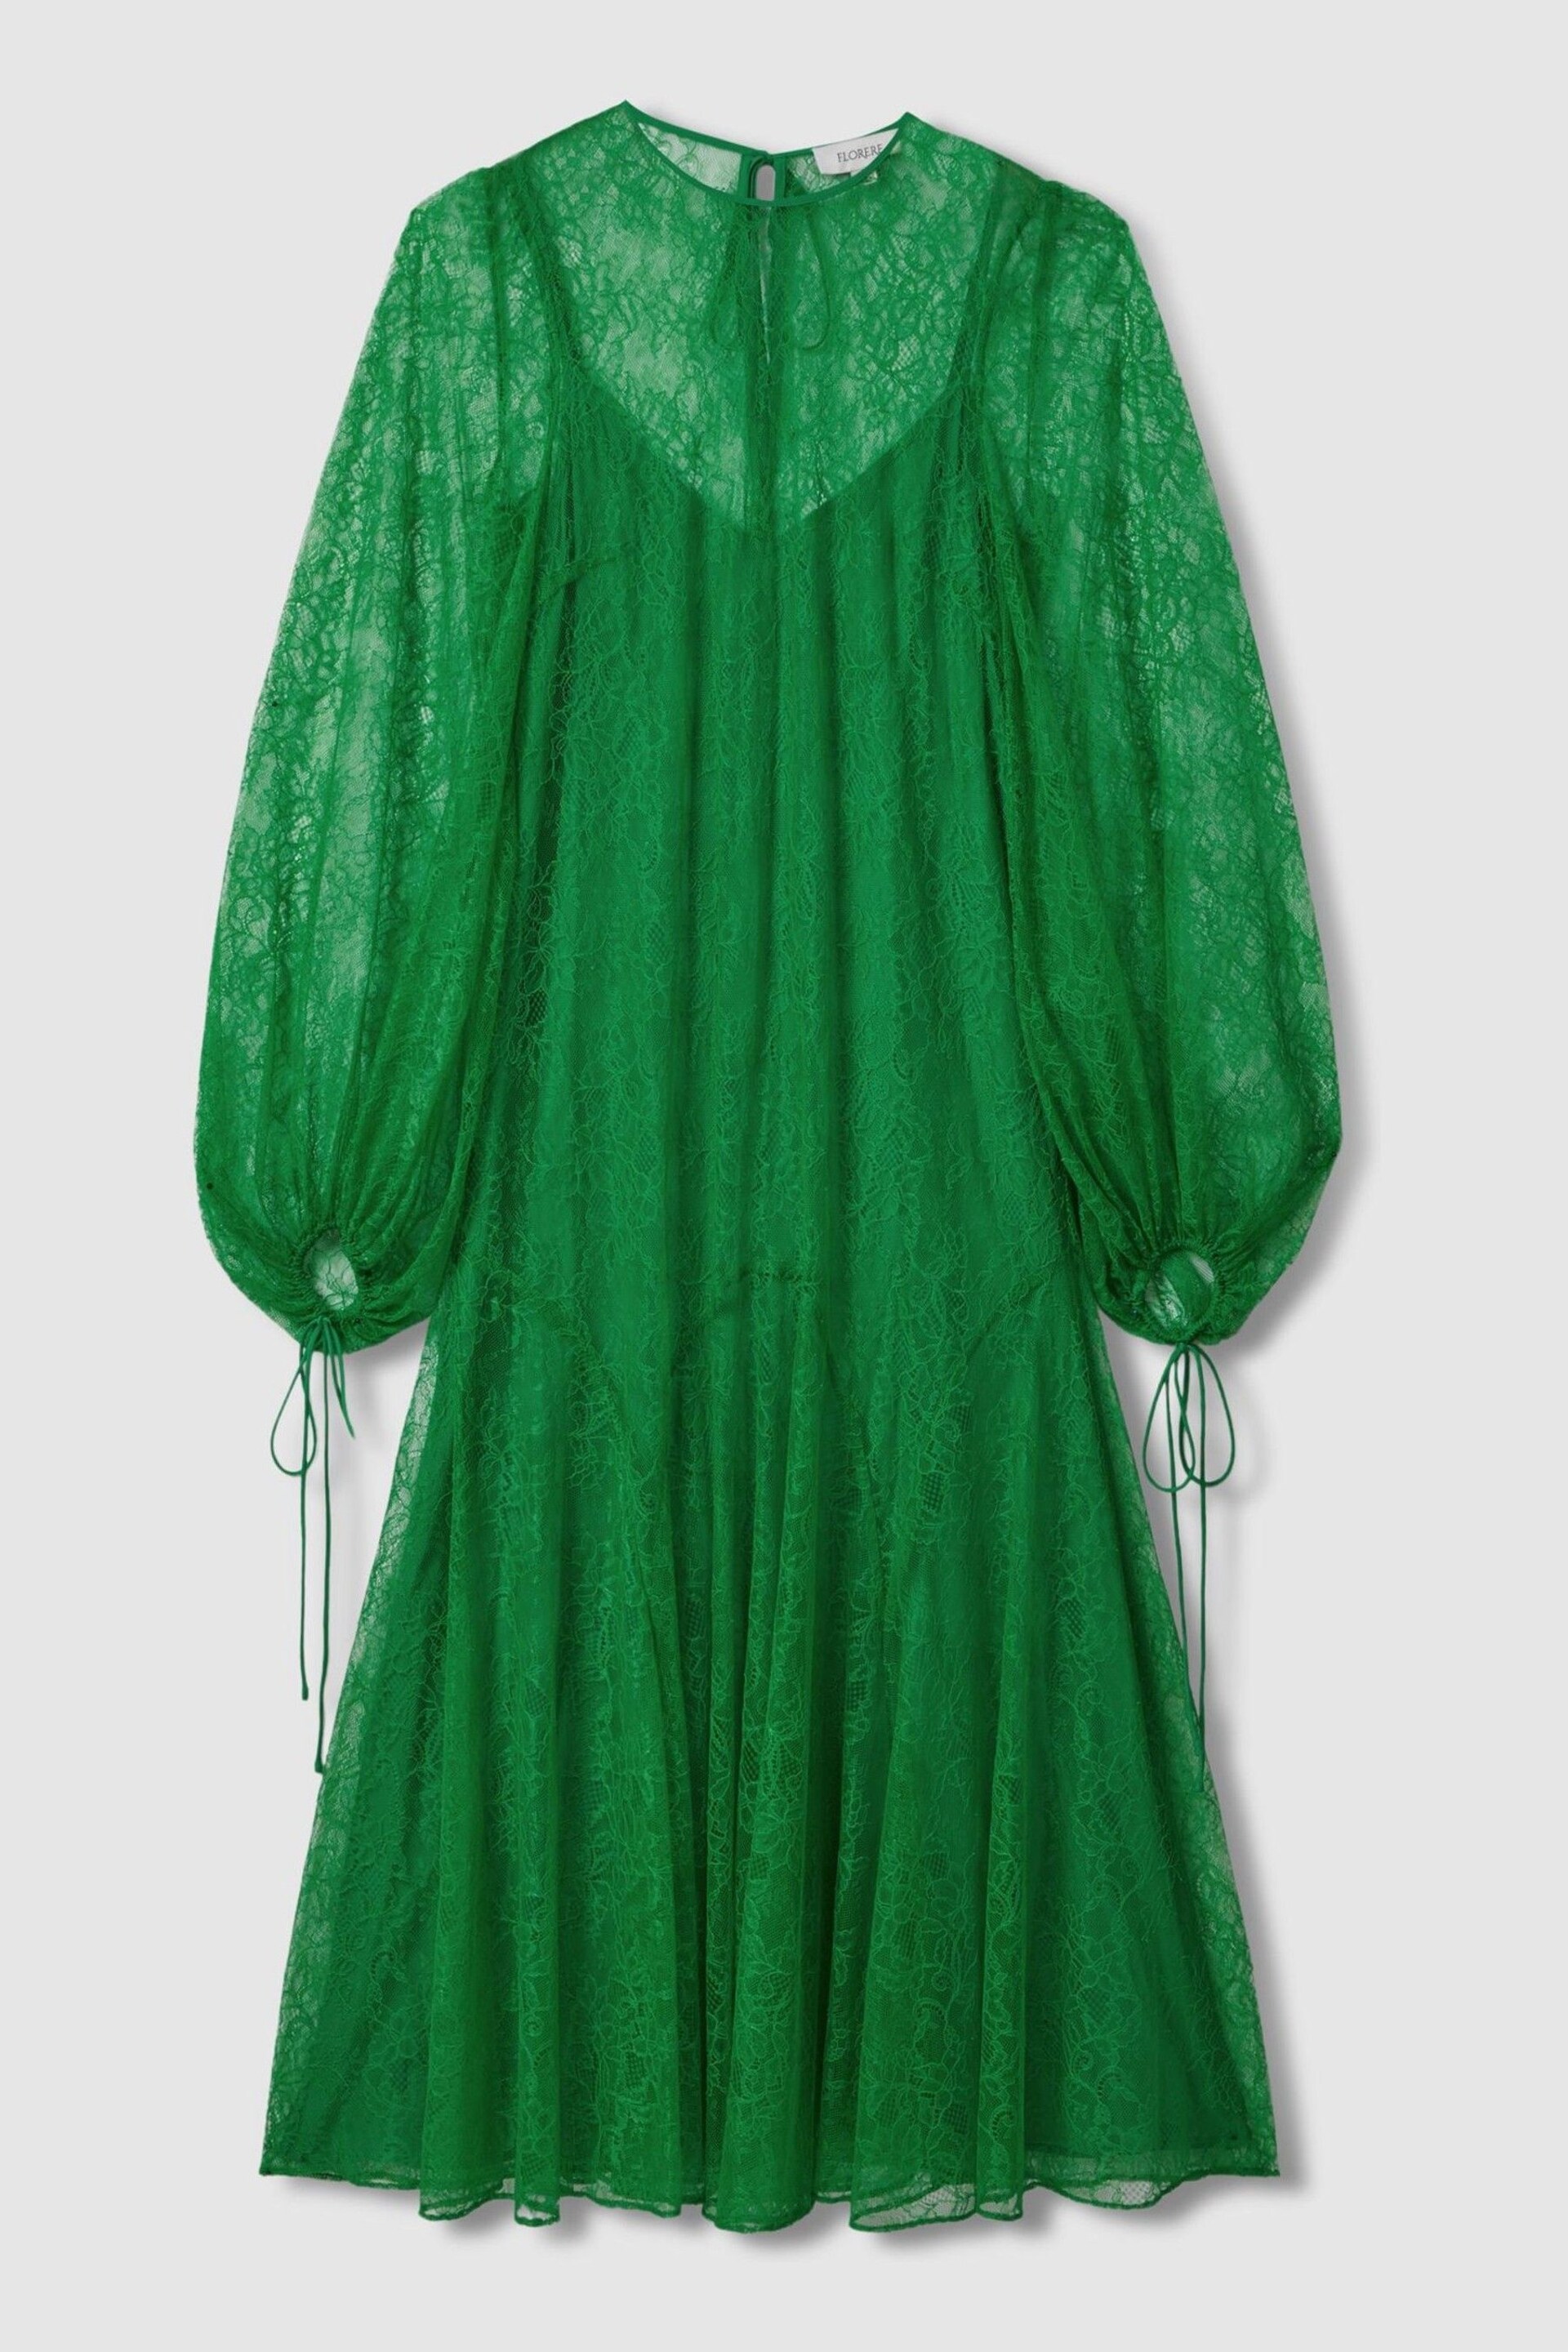 Florere Lace Midi Dress - Image 2 of 6